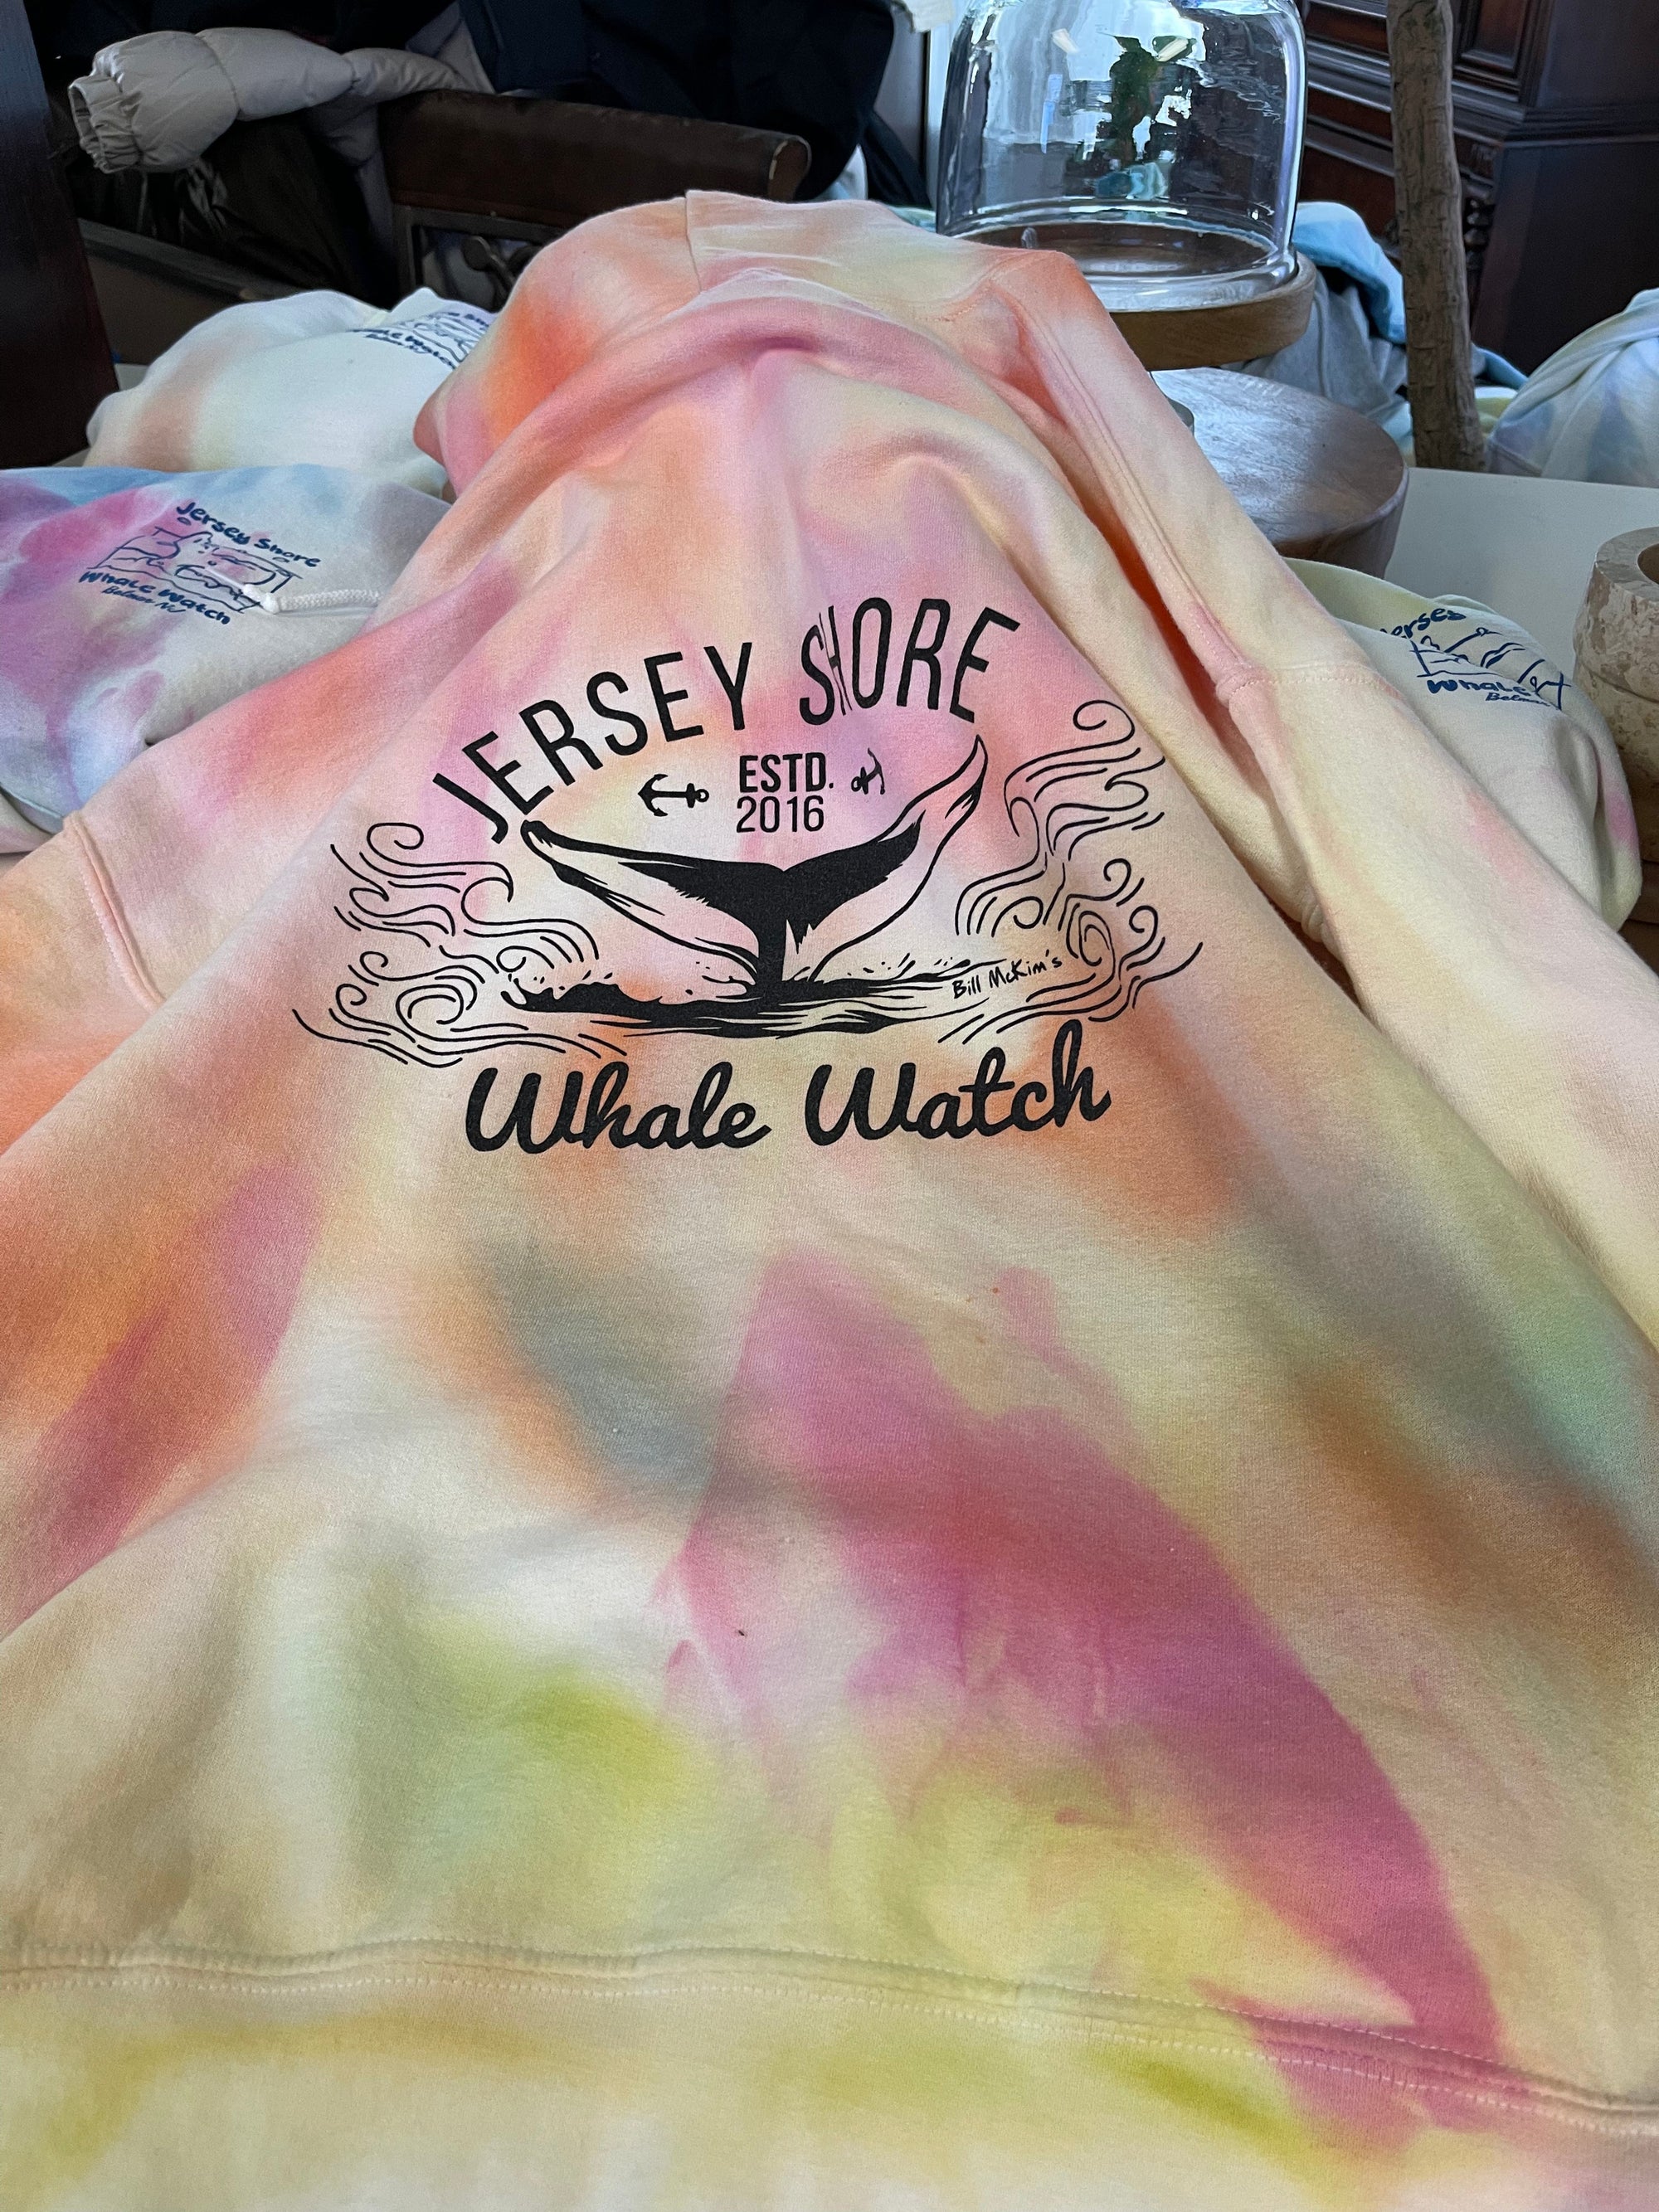 Crewneck Sweatshirt Unique Tie Dye Jersey Shore Whale Watch t Original Design Bill McKim Photography 